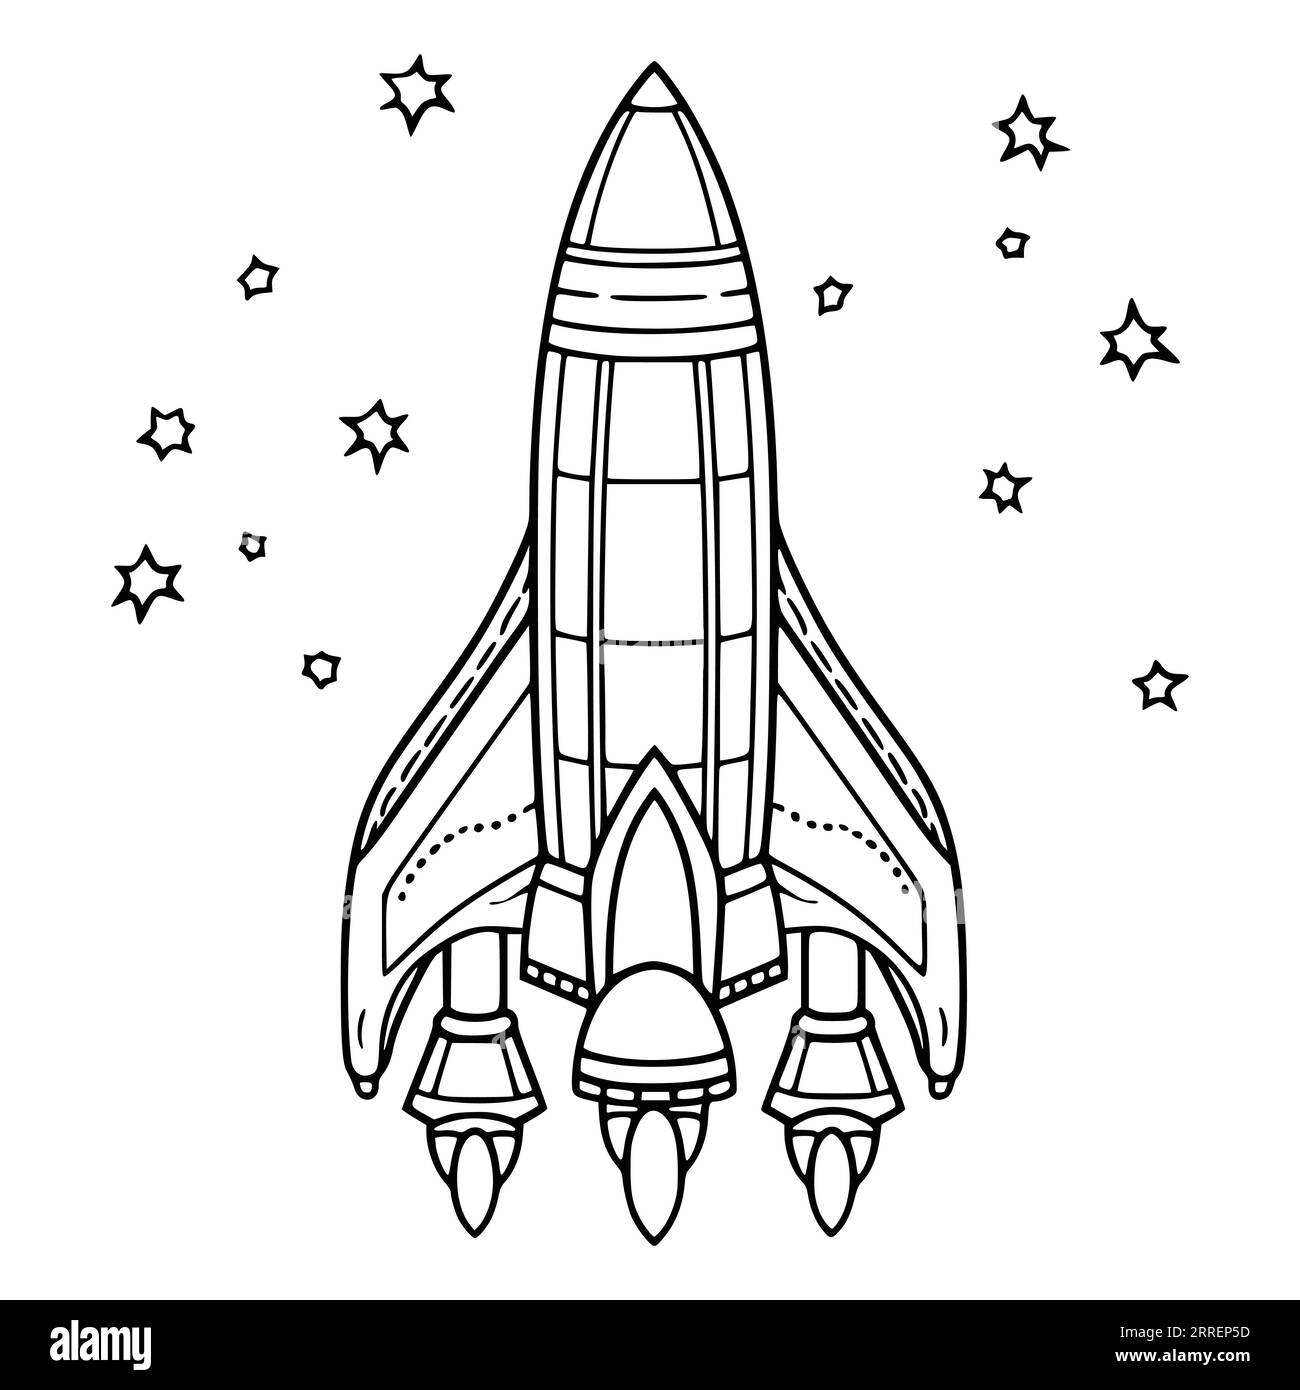 https://c8.alamy.com/comp/2RREP5D/starship-or-rocket-with-pilot-coloring-page-for-kids-2RREP5D.jpg